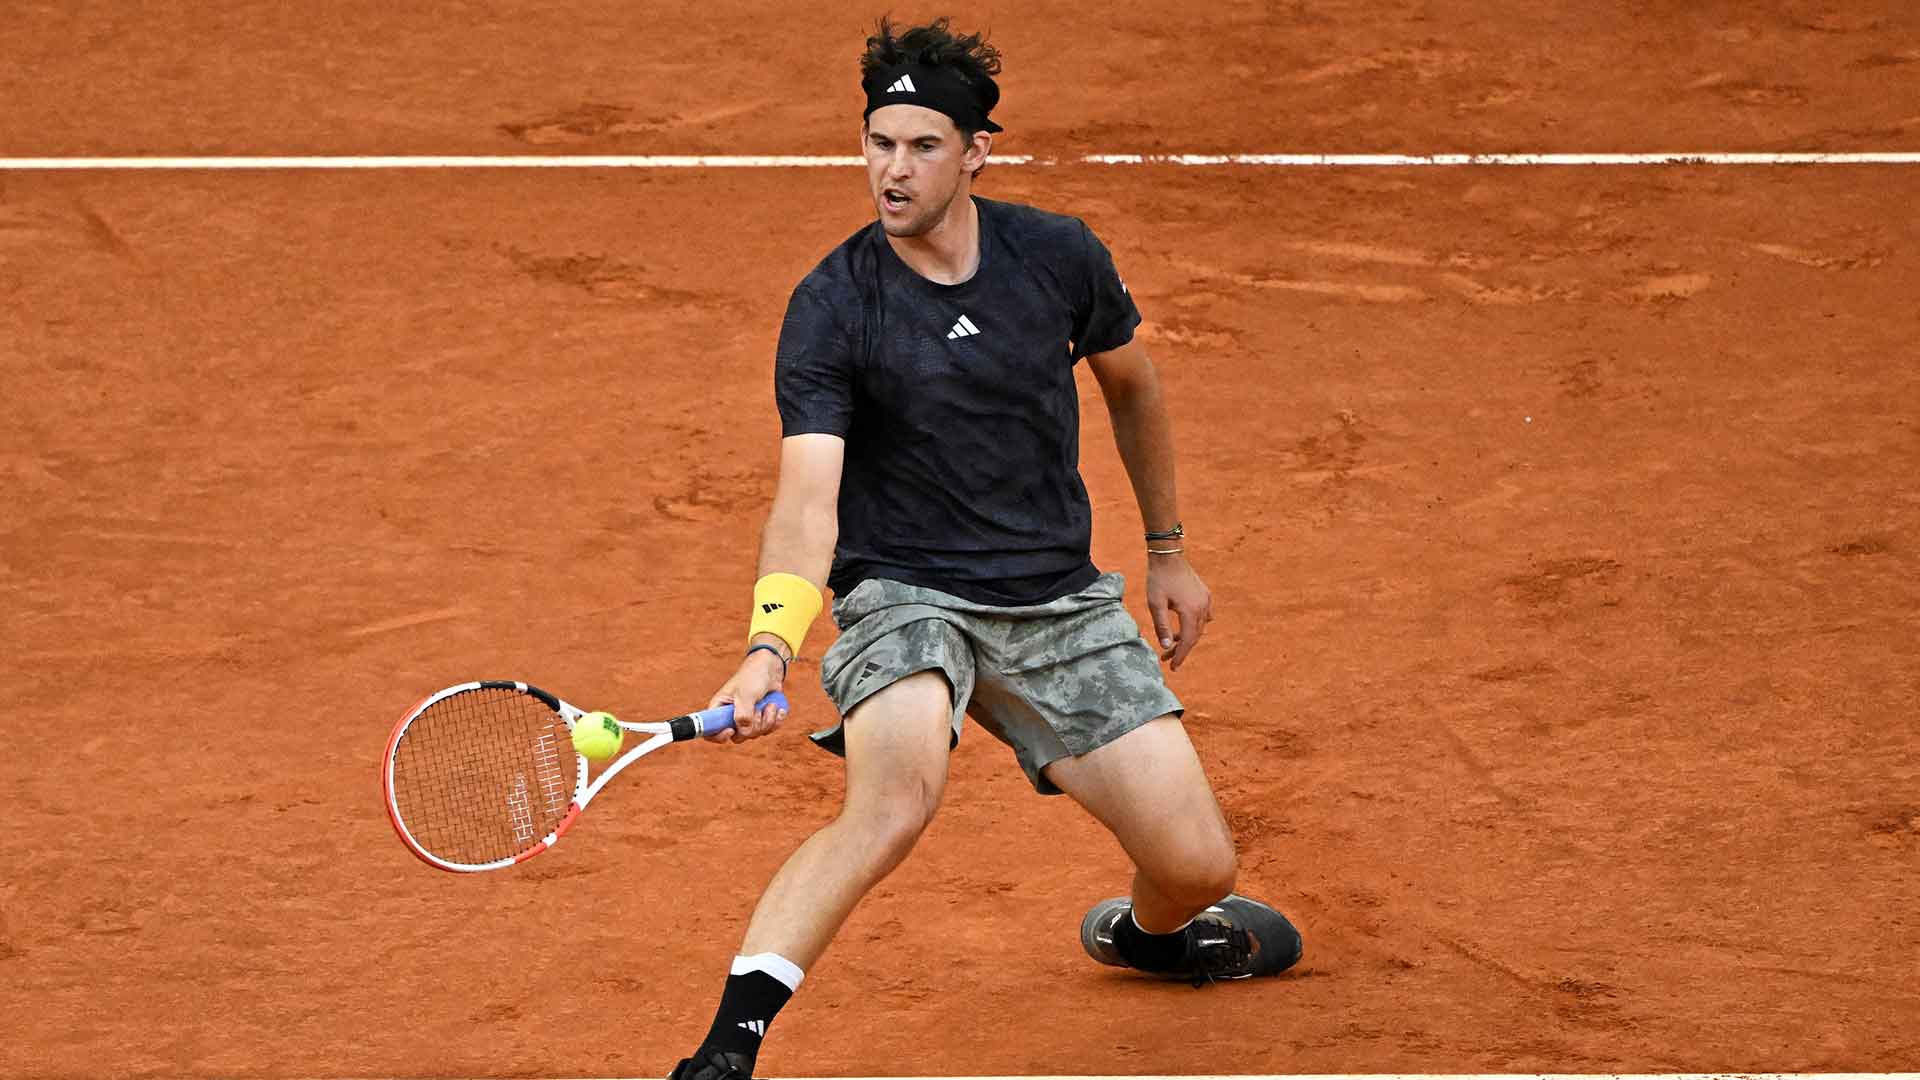 Former Roland Garros finalist Thiem earns opening qualifying win